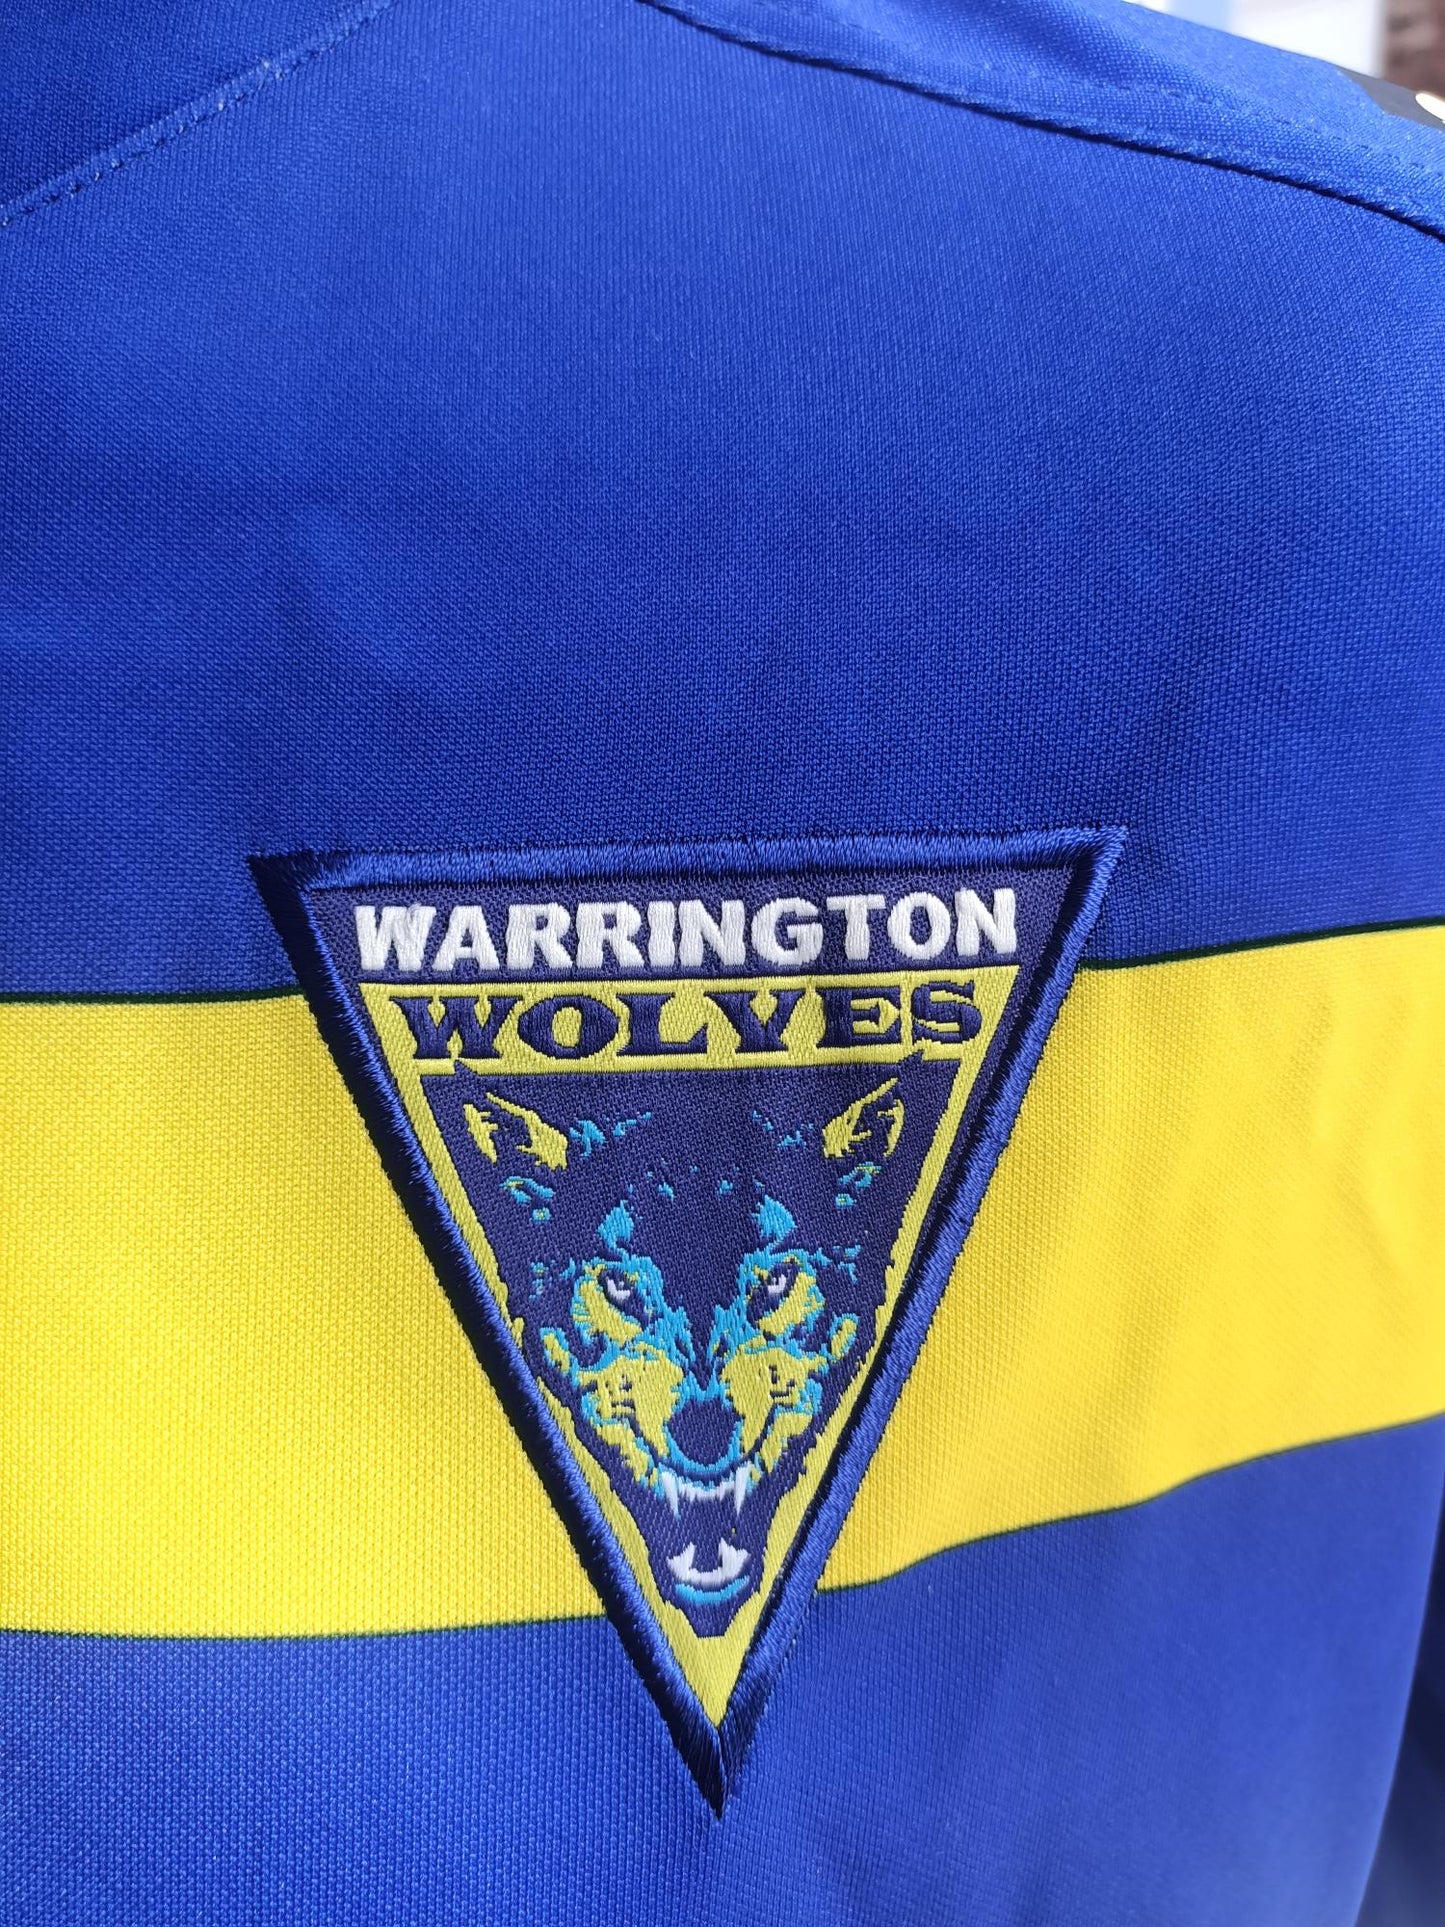 Warrington Wolves 2015 Home shirt used